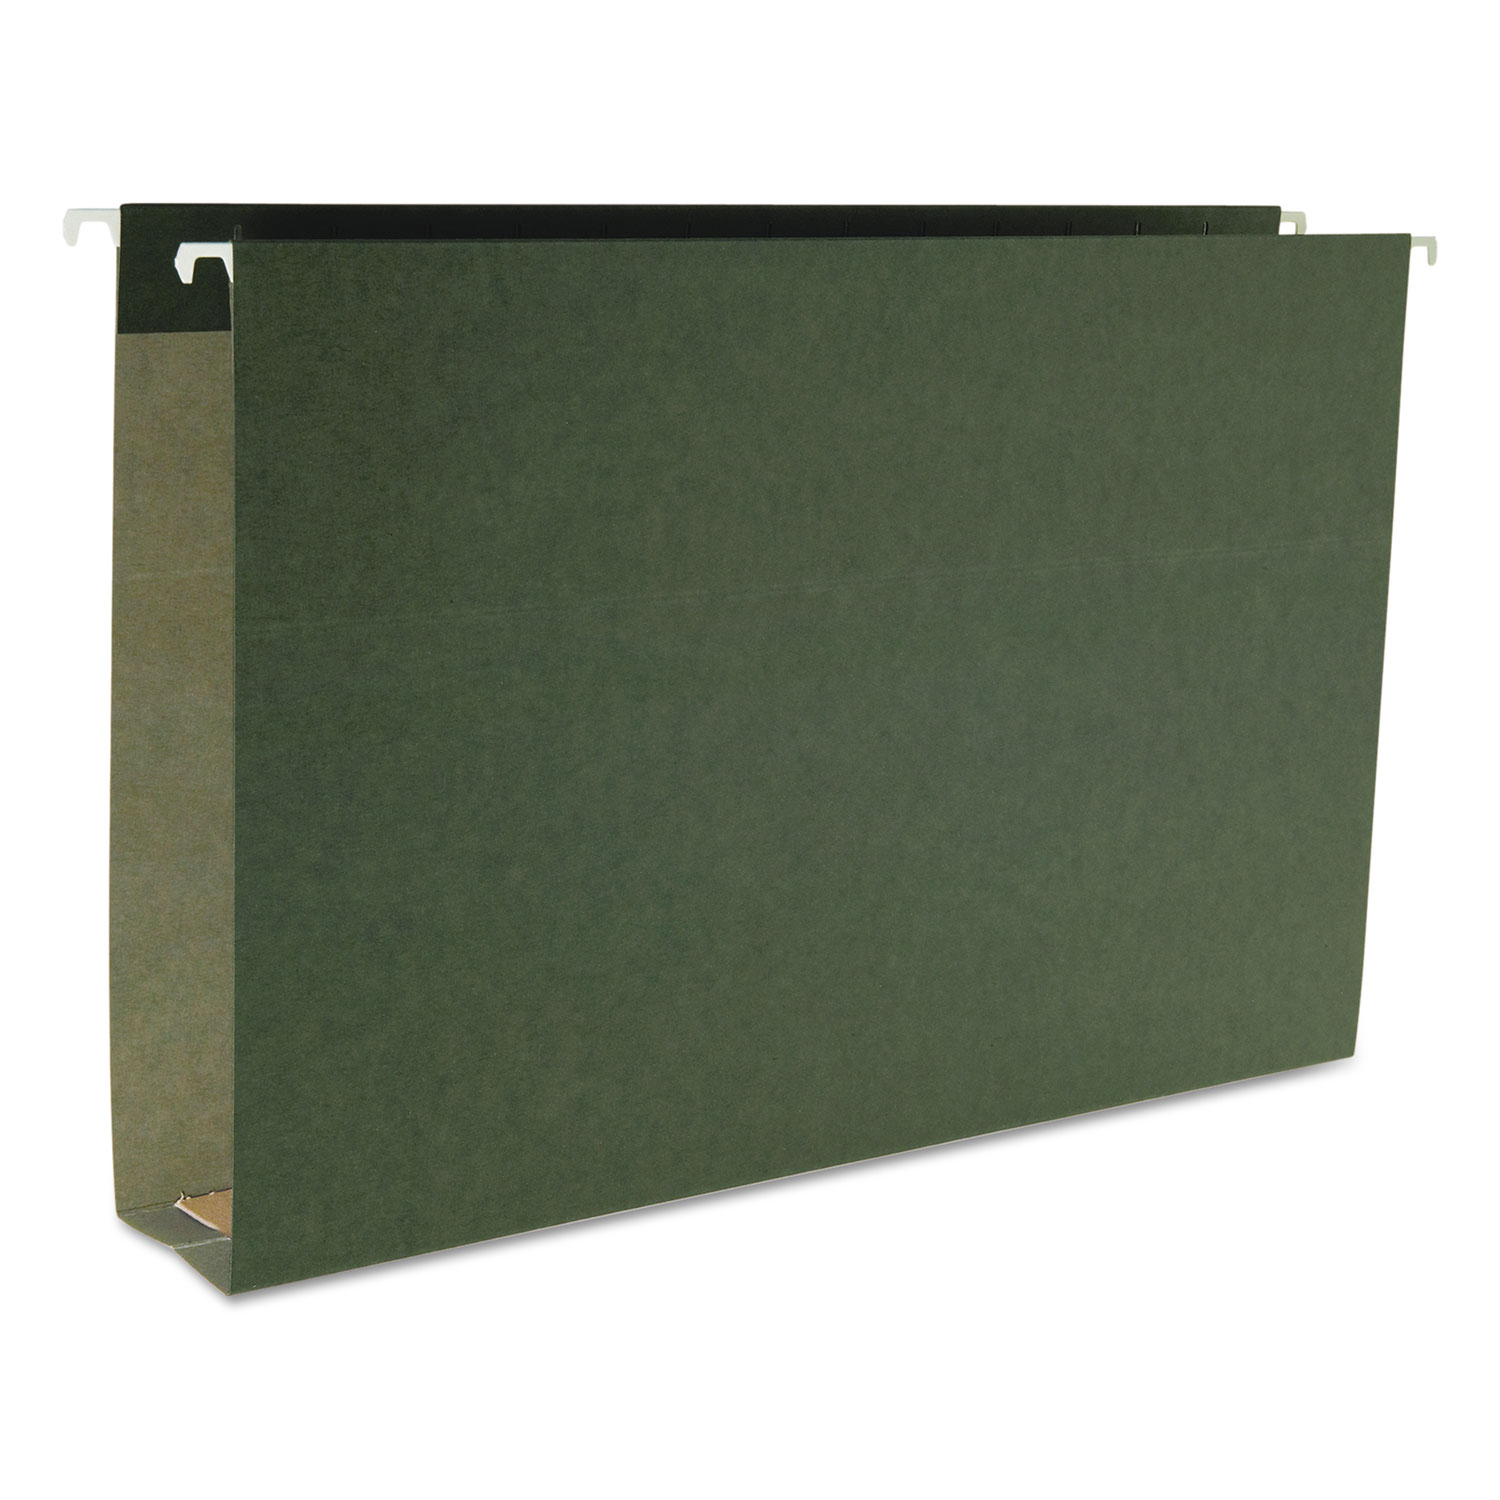  Smead 64359 Box Bottom Hanging File Folders, Legal Size, Standard Green, 25/Box (SMD64359) 